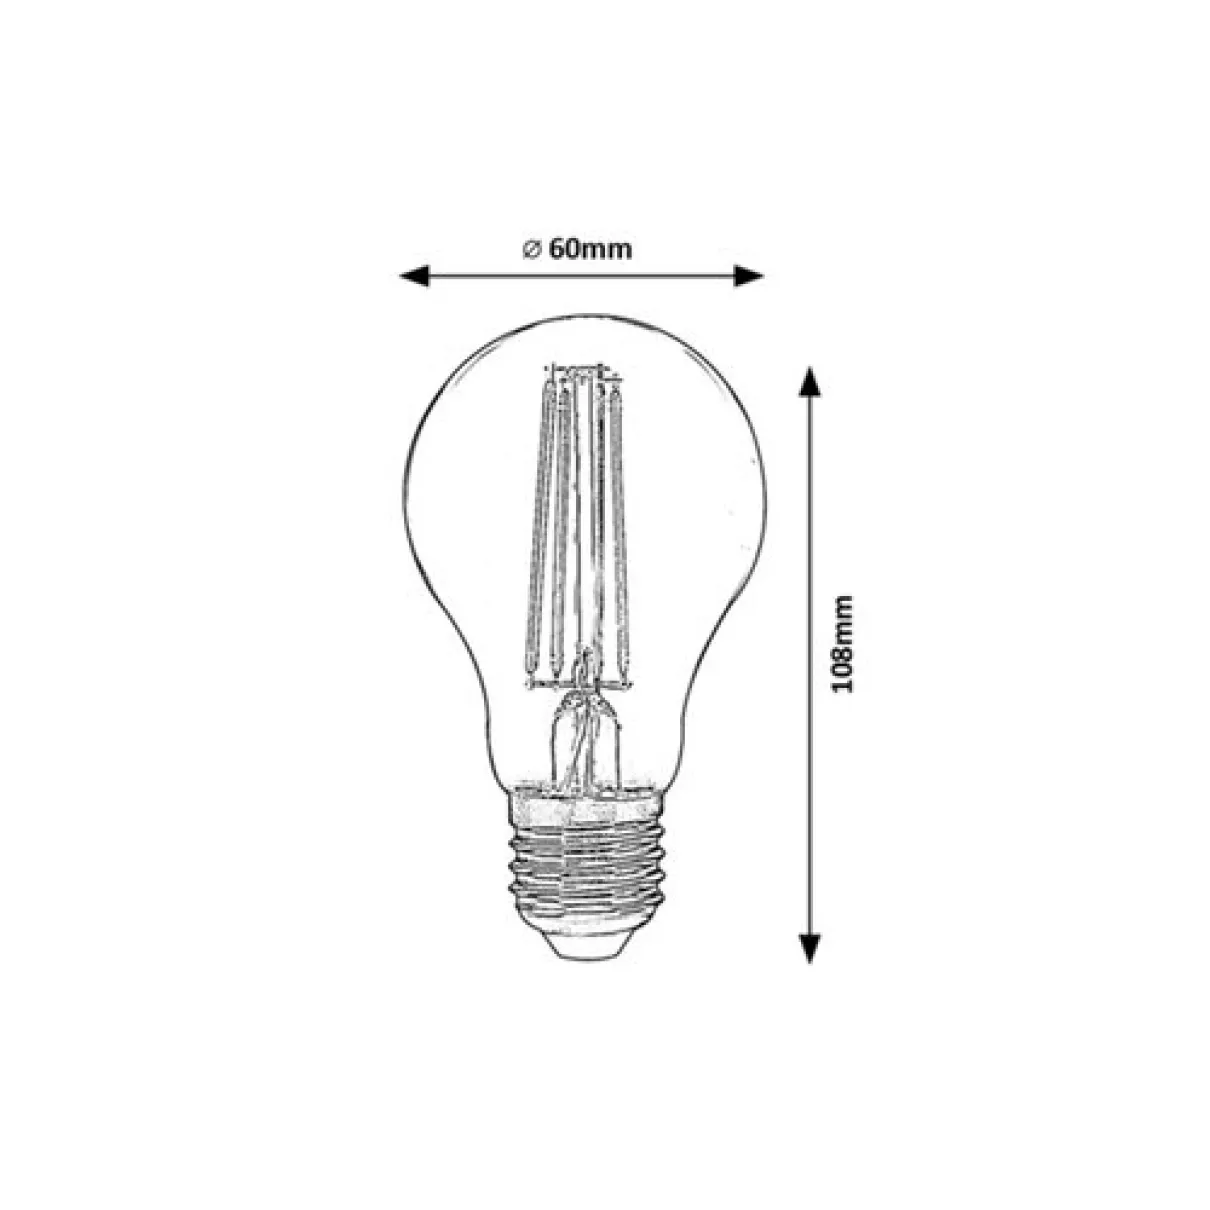 Filament-LED Okos izzó led  700 Lumen - Raba-1513